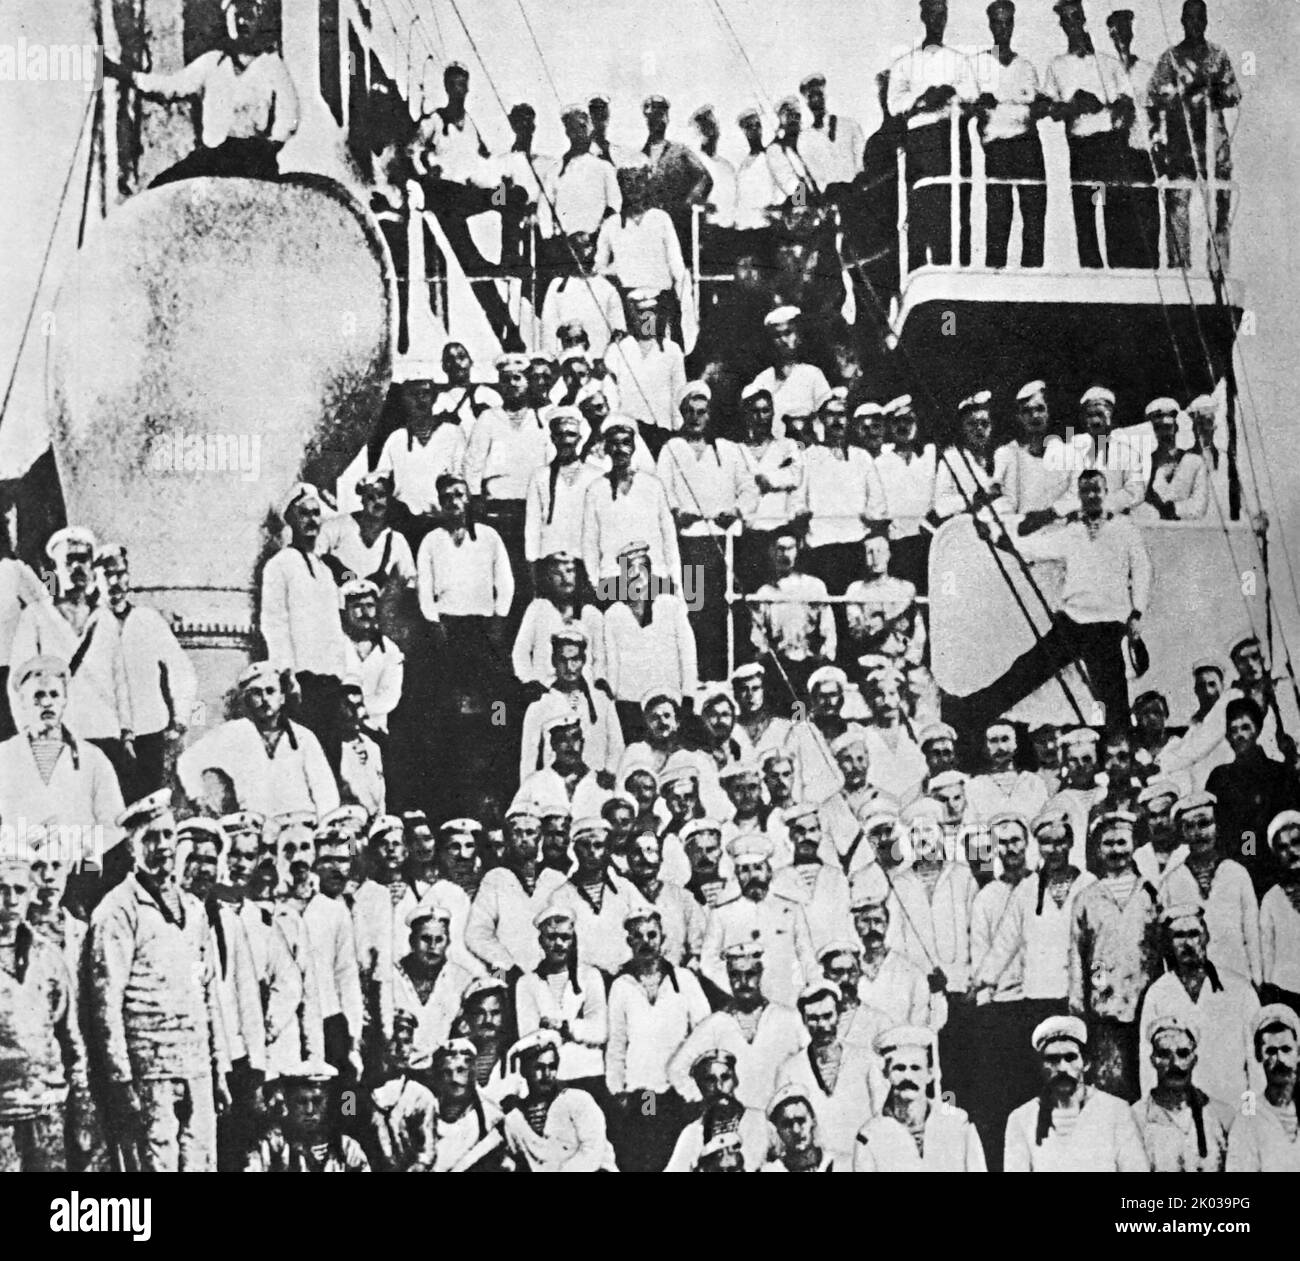 Sevastopol armed uprising of 1905. Crew of the rebel cruiser Ochakov two weeks before the uprising. Stock Photo